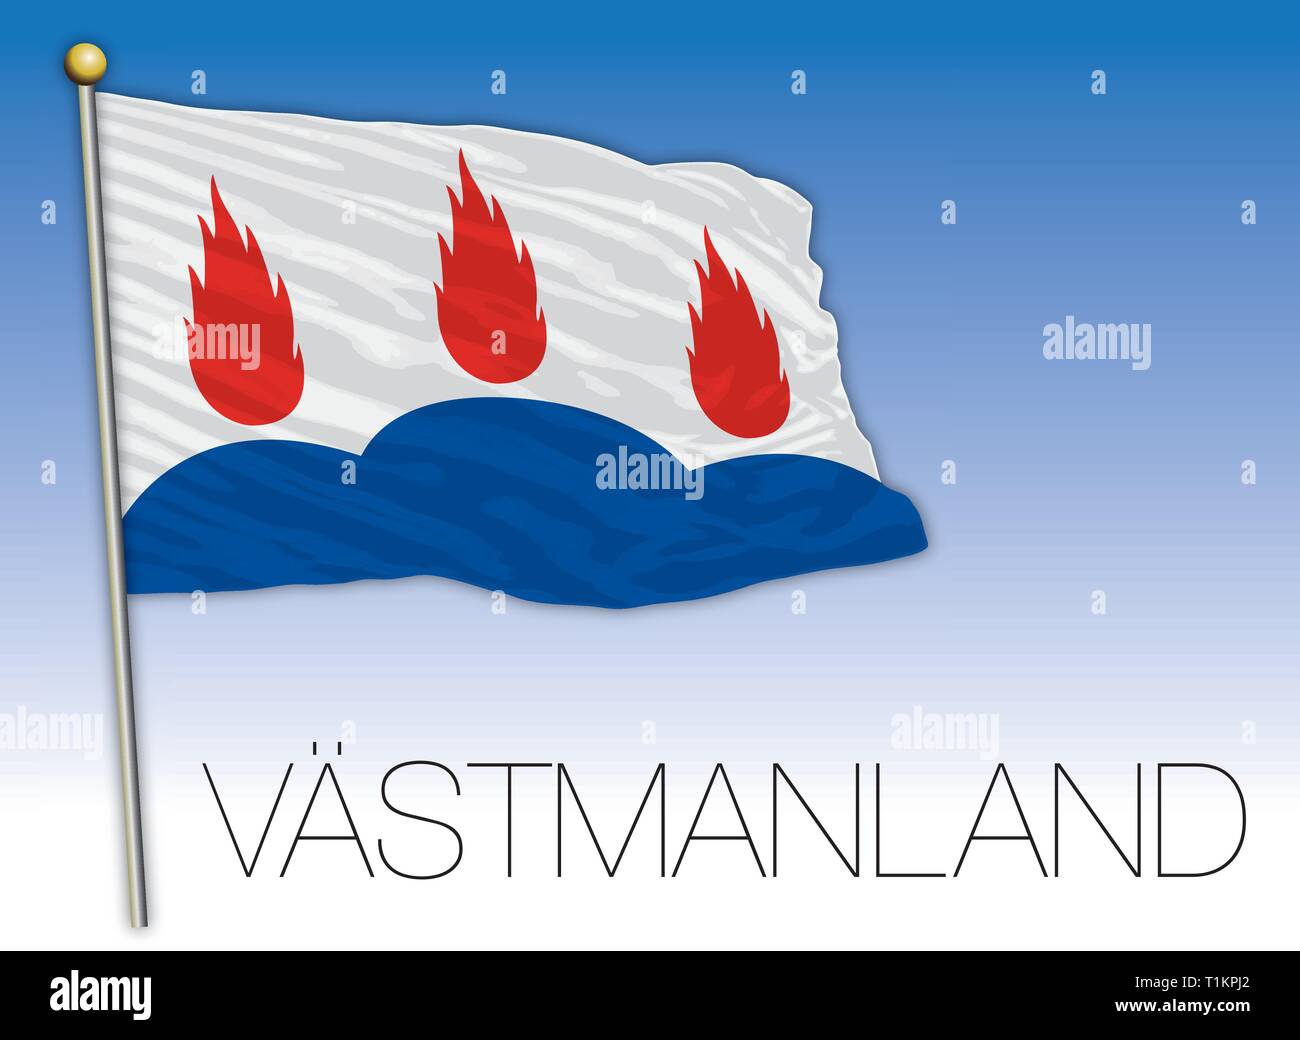 Vastmanland regional flag, Sweden, vector illustration Stock Vector